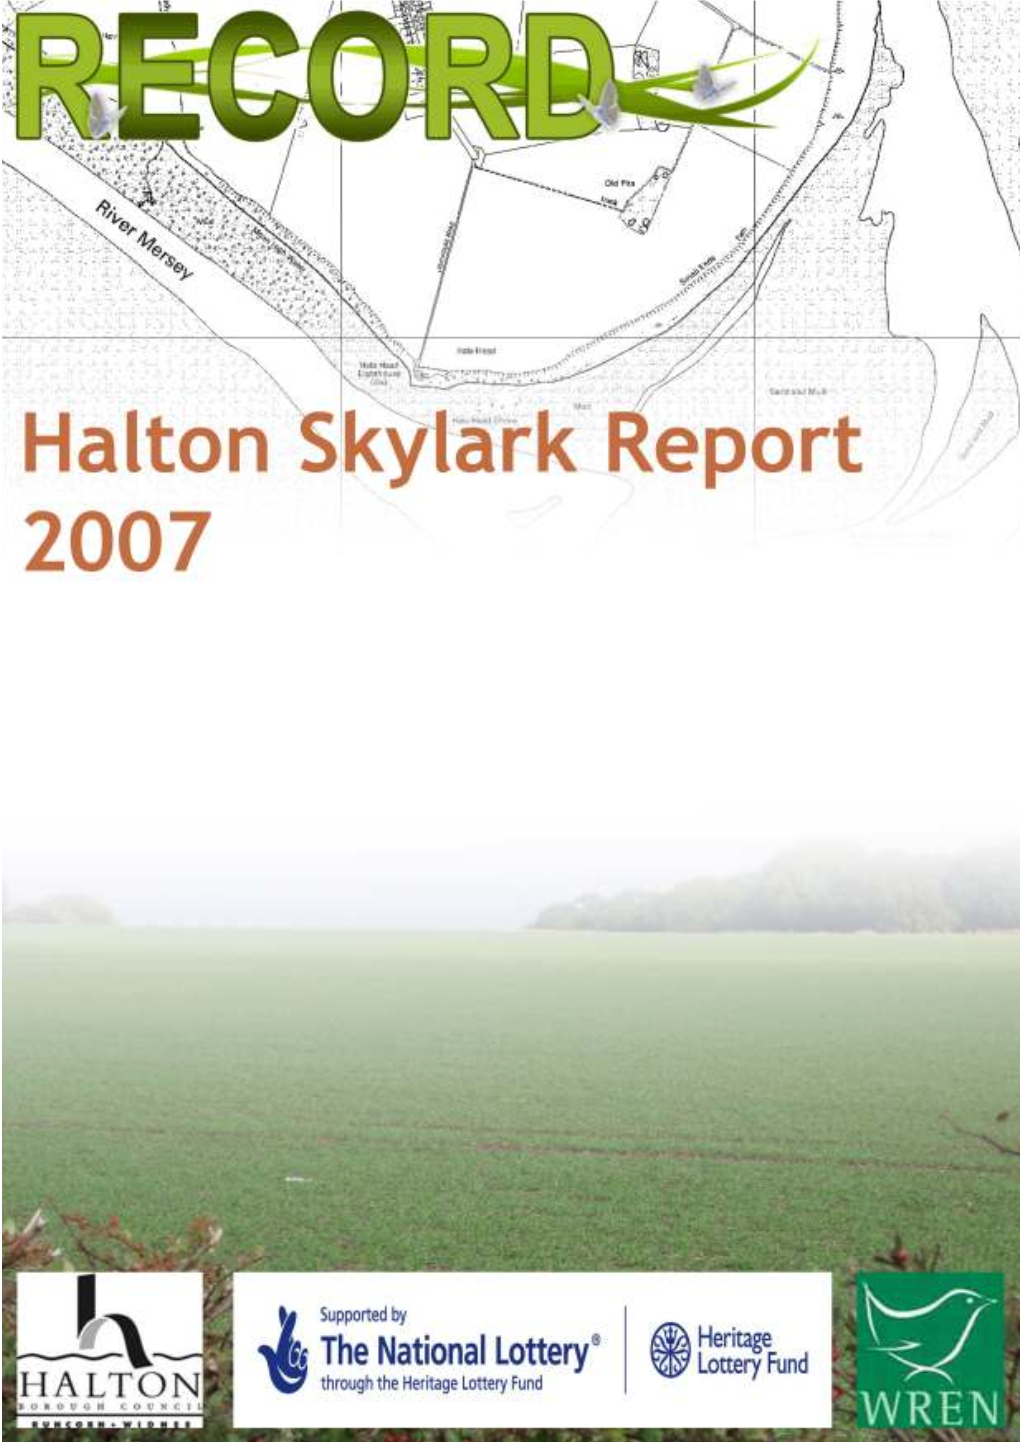 Halton Skylark Report 2007 Contents Introduction 3 Methodology 5